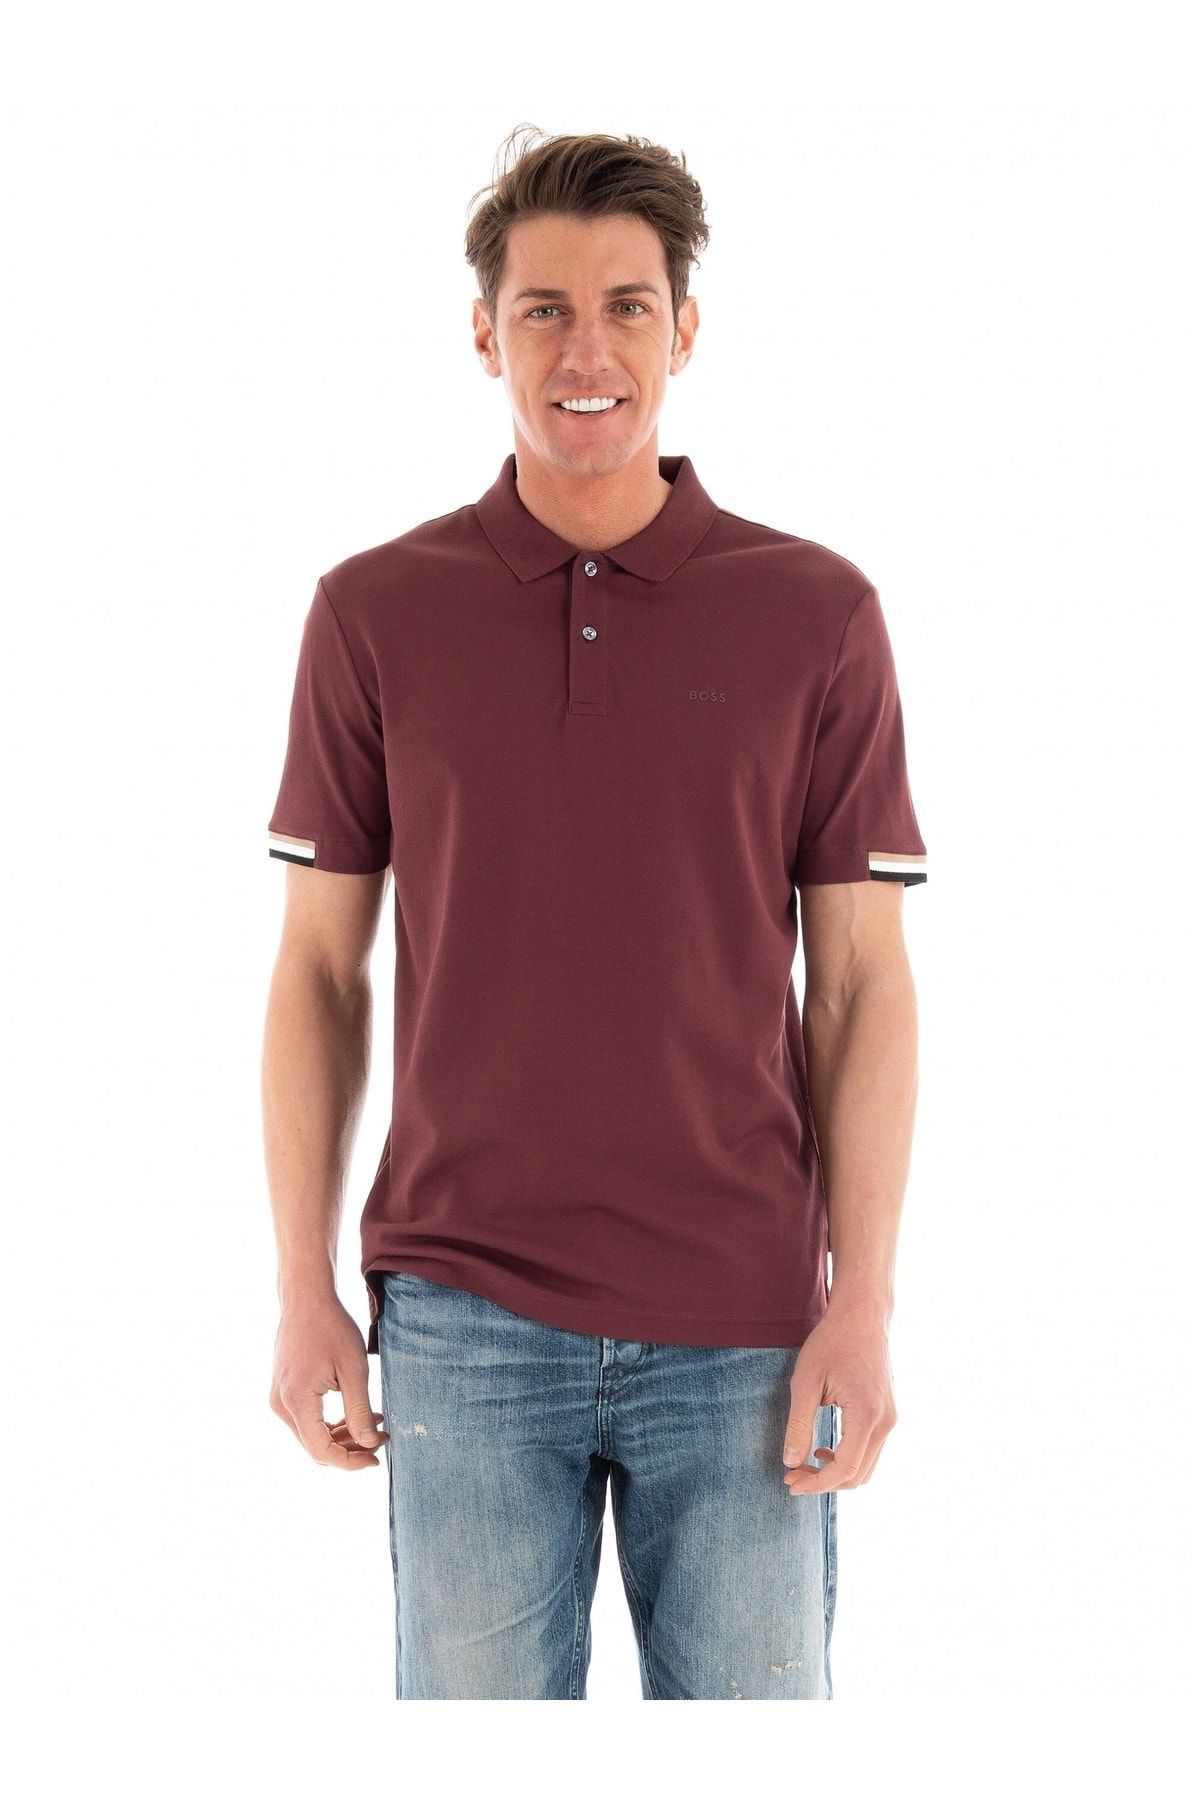 BOSS تی شرت مردانه آستین کوتاه با یقه قرمز ساده تناسب معمولی 50467113-601